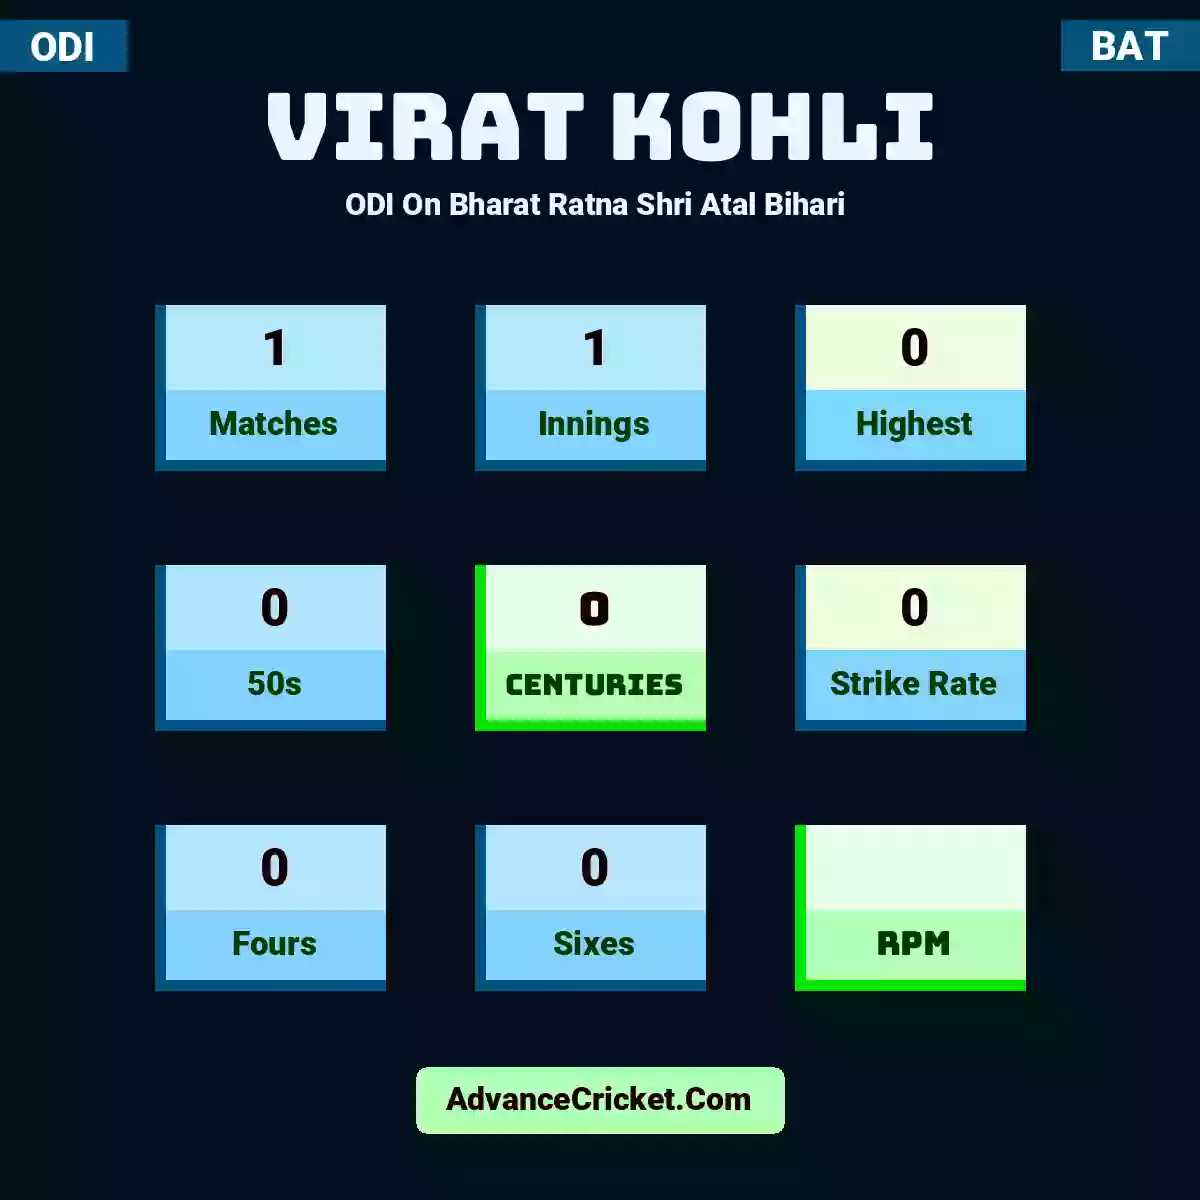 Virat Kohli ODI  On Bharat Ratna Shri Atal Bihari , Virat Kohli played 1 matches, scored 0 runs as highest, 0 half-centuries, and 0 centuries, with a strike rate of 0. V.Kohli hit 0 fours and 0 sixes.